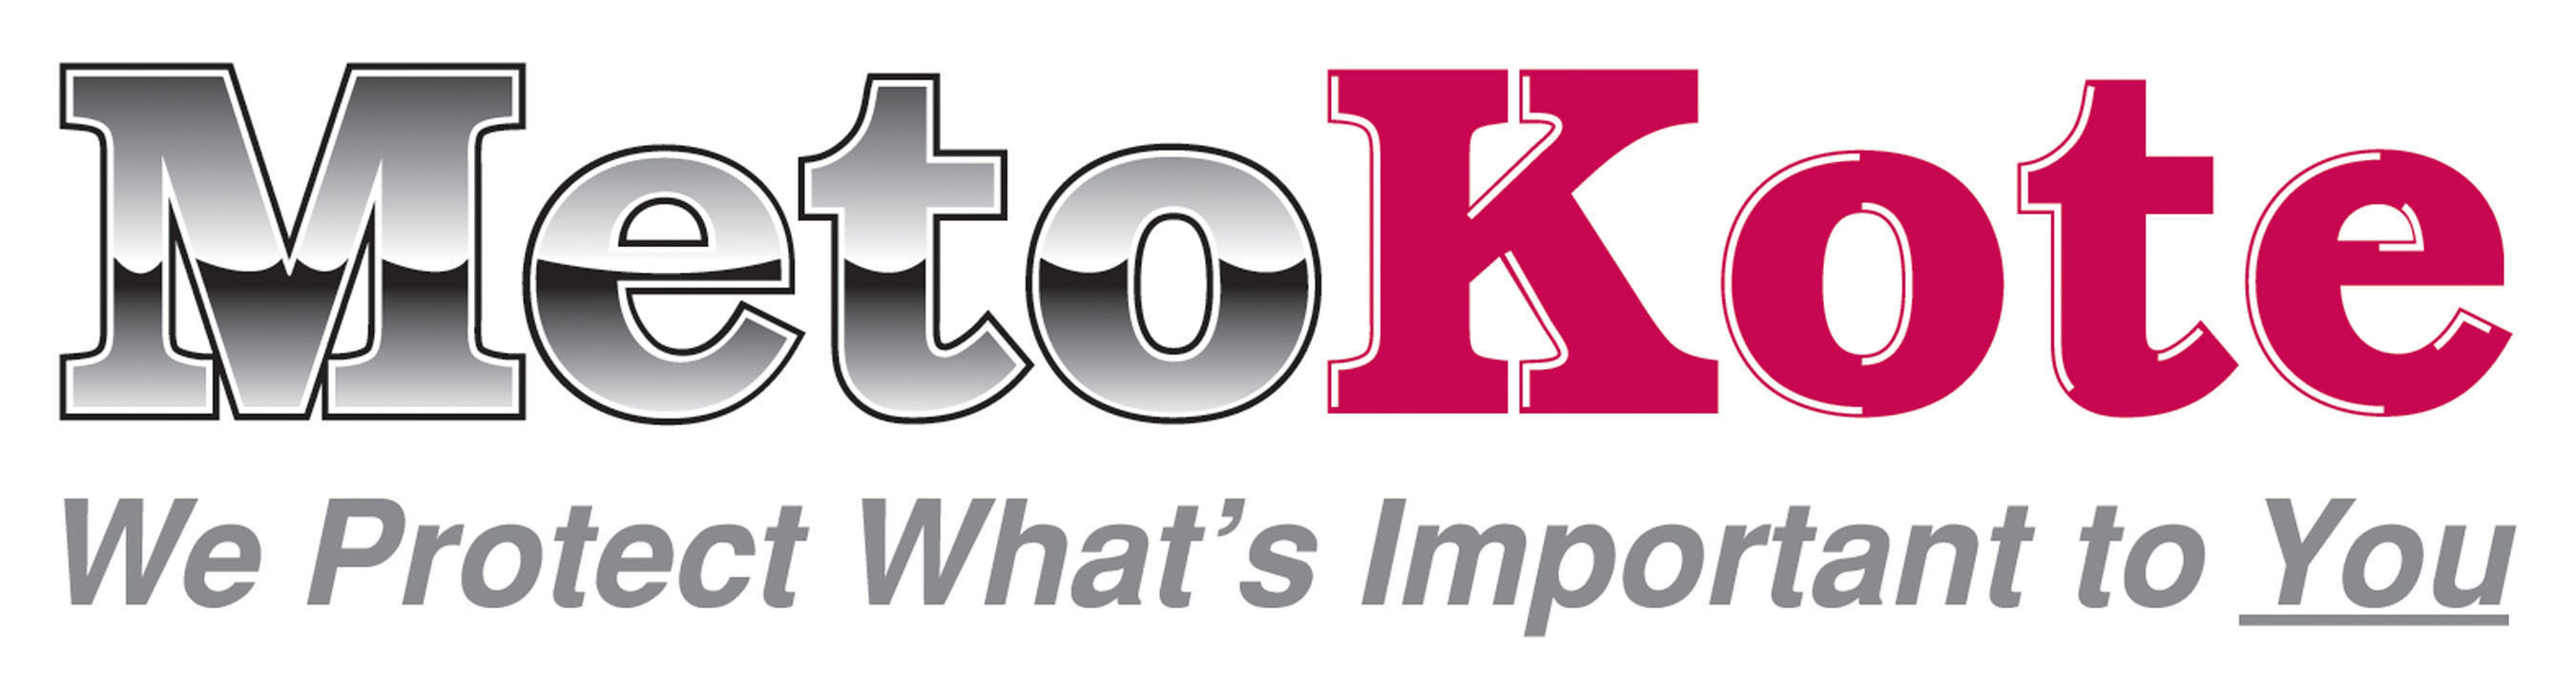 MetoKote Corporation logo. (PRNewsFoto/MetoKote Corporation) (PRNewsFoto/)